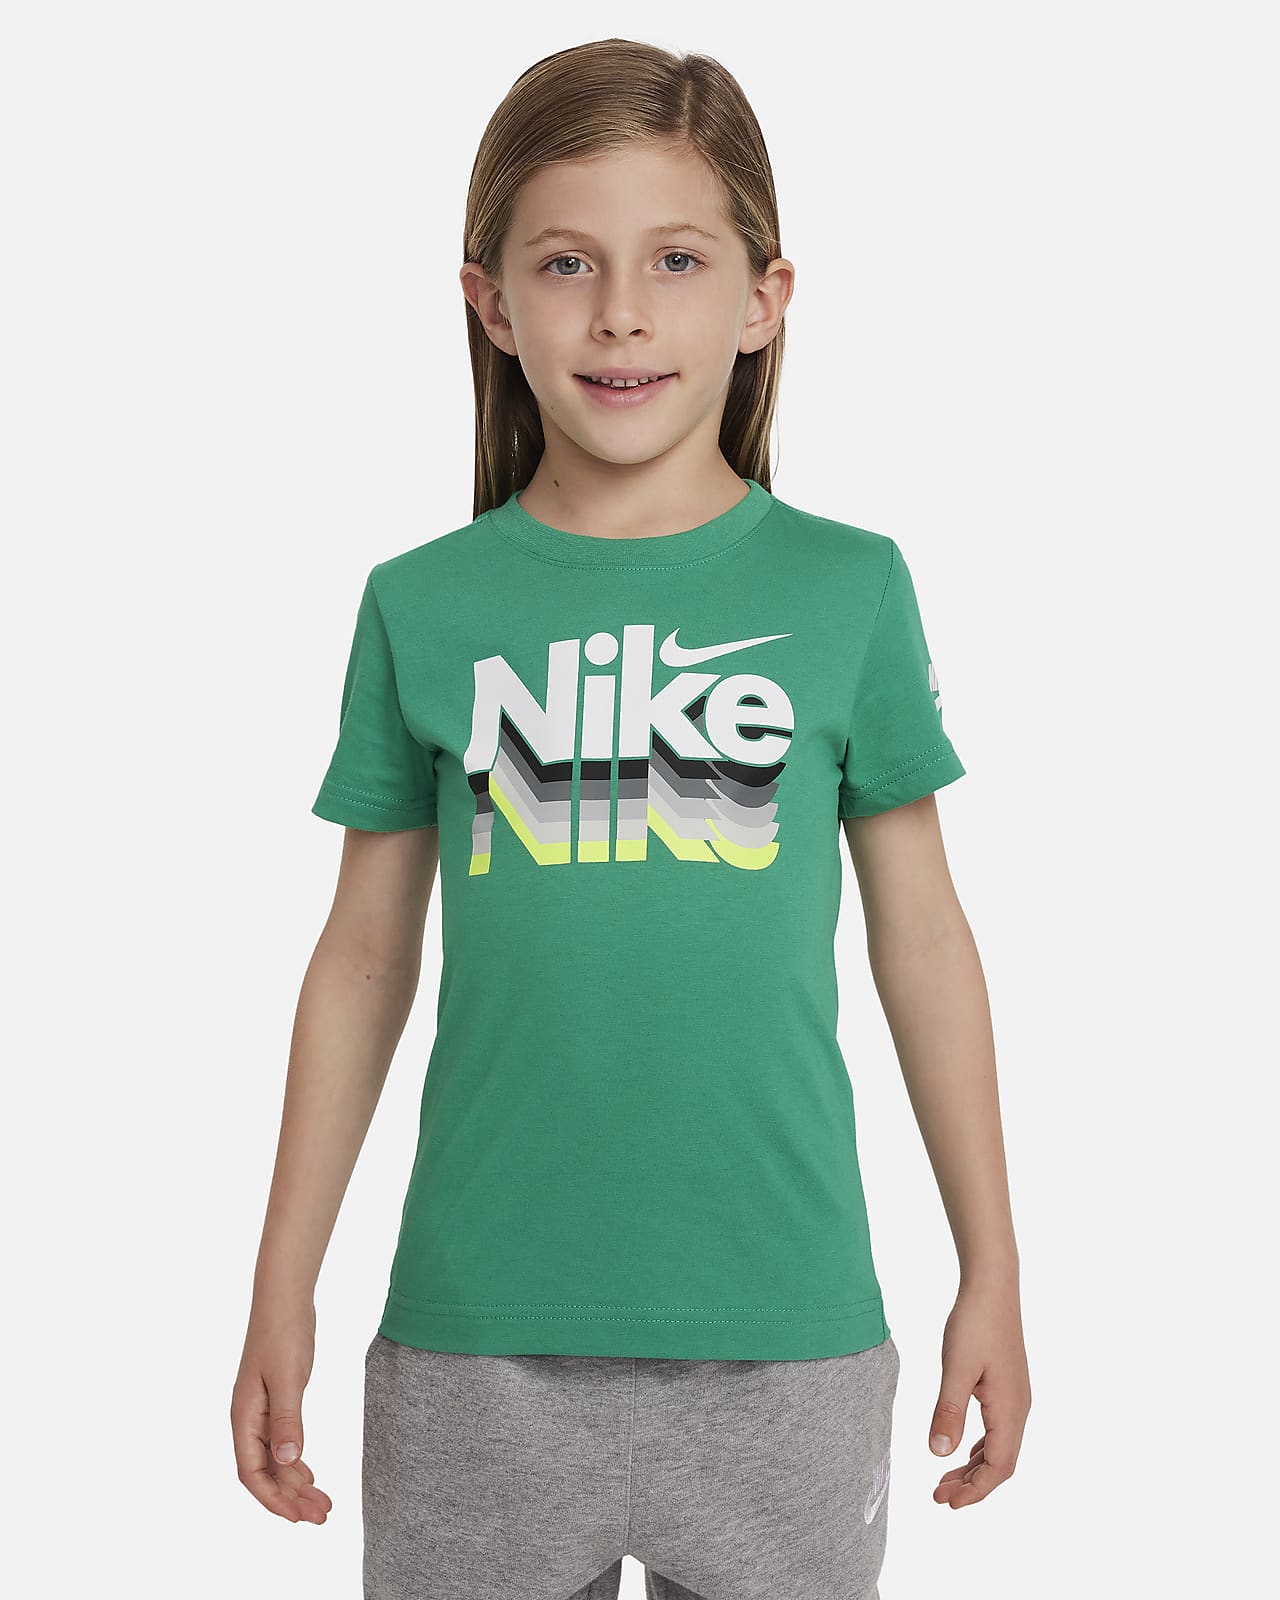 Playera estampada para niño talla pequeña Nike Retro Fader